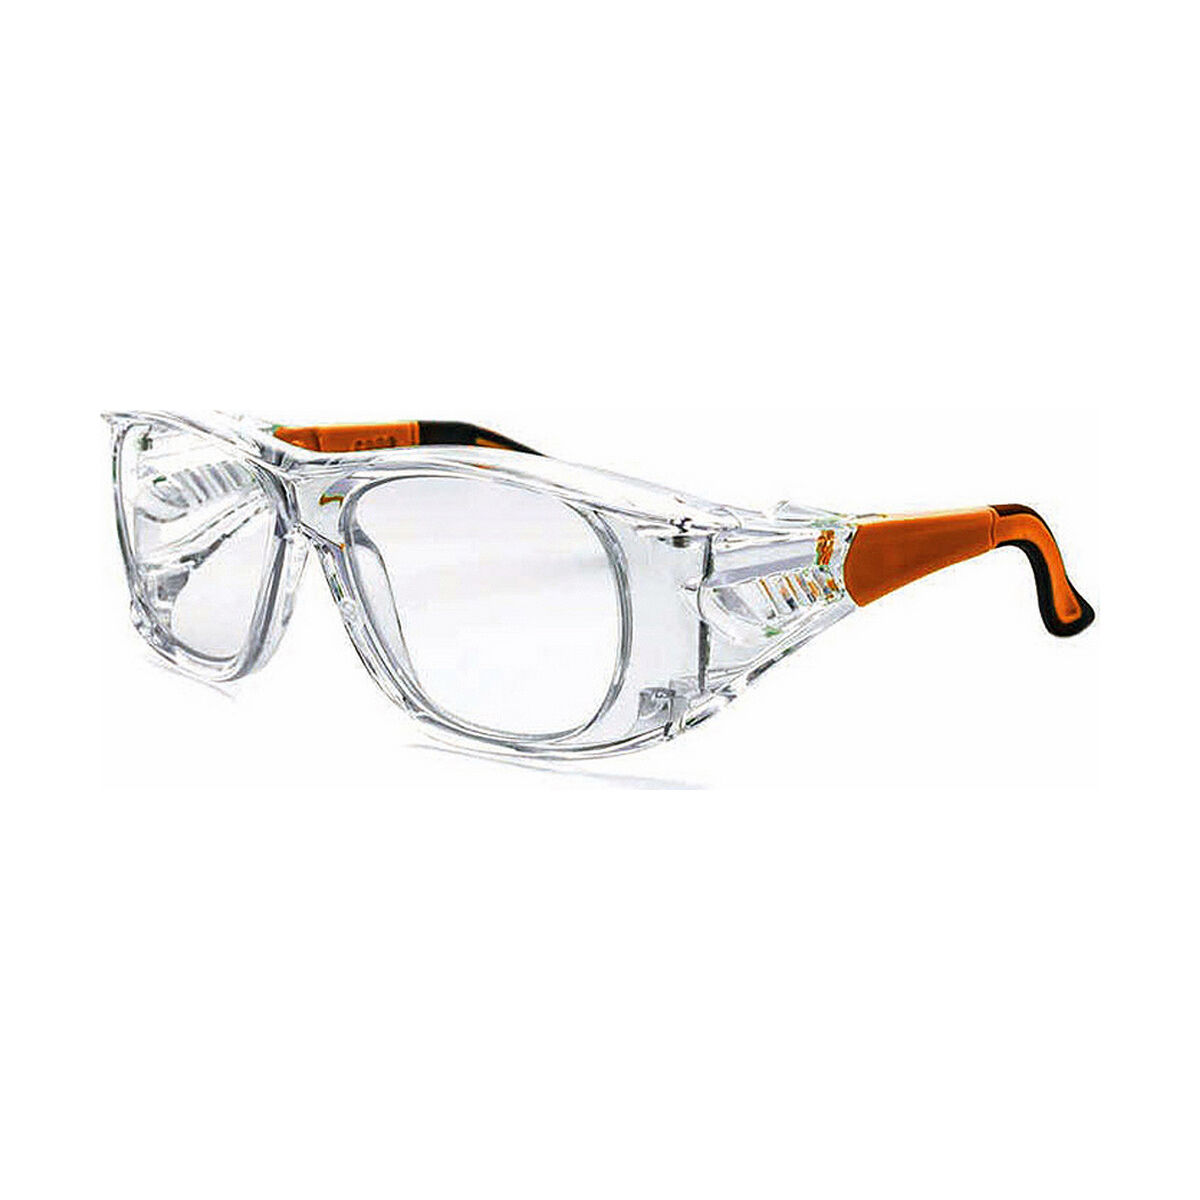 Occhiali Protettivi Varionet Safetypro 100 V2 Arancio